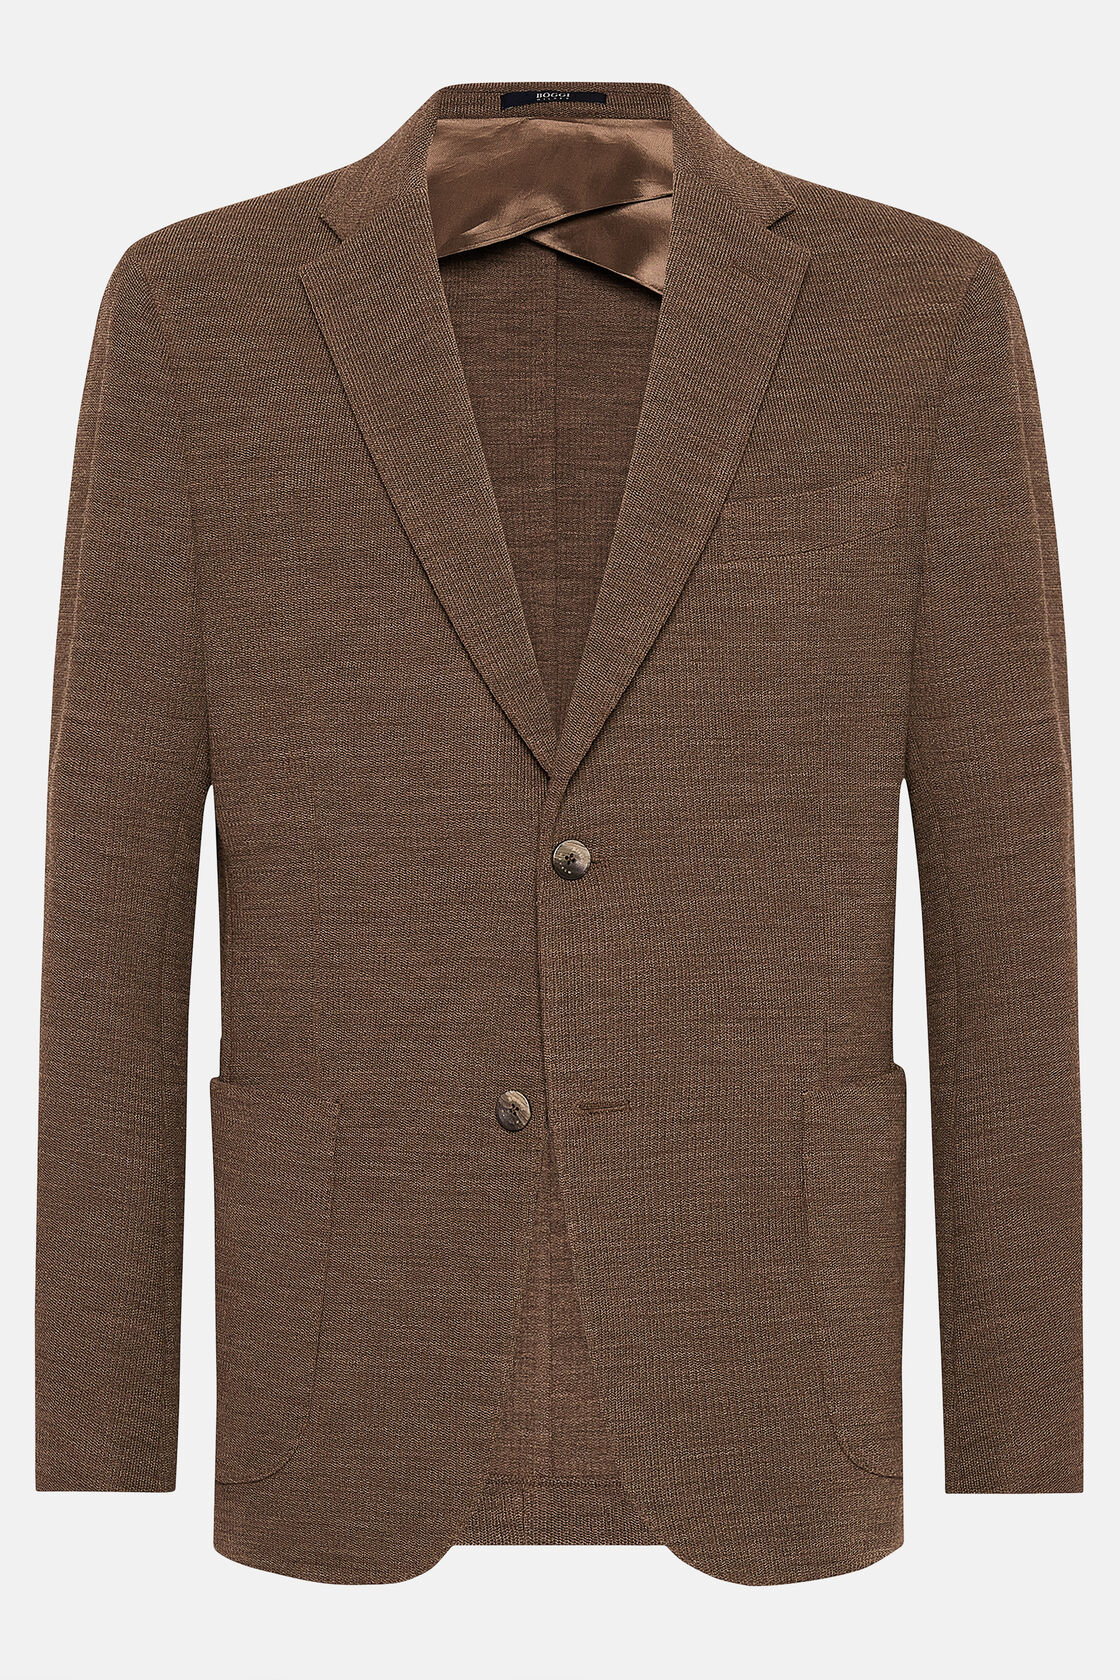 Military Brown Textured Wool Jersey Jacket, Brown, hi-res